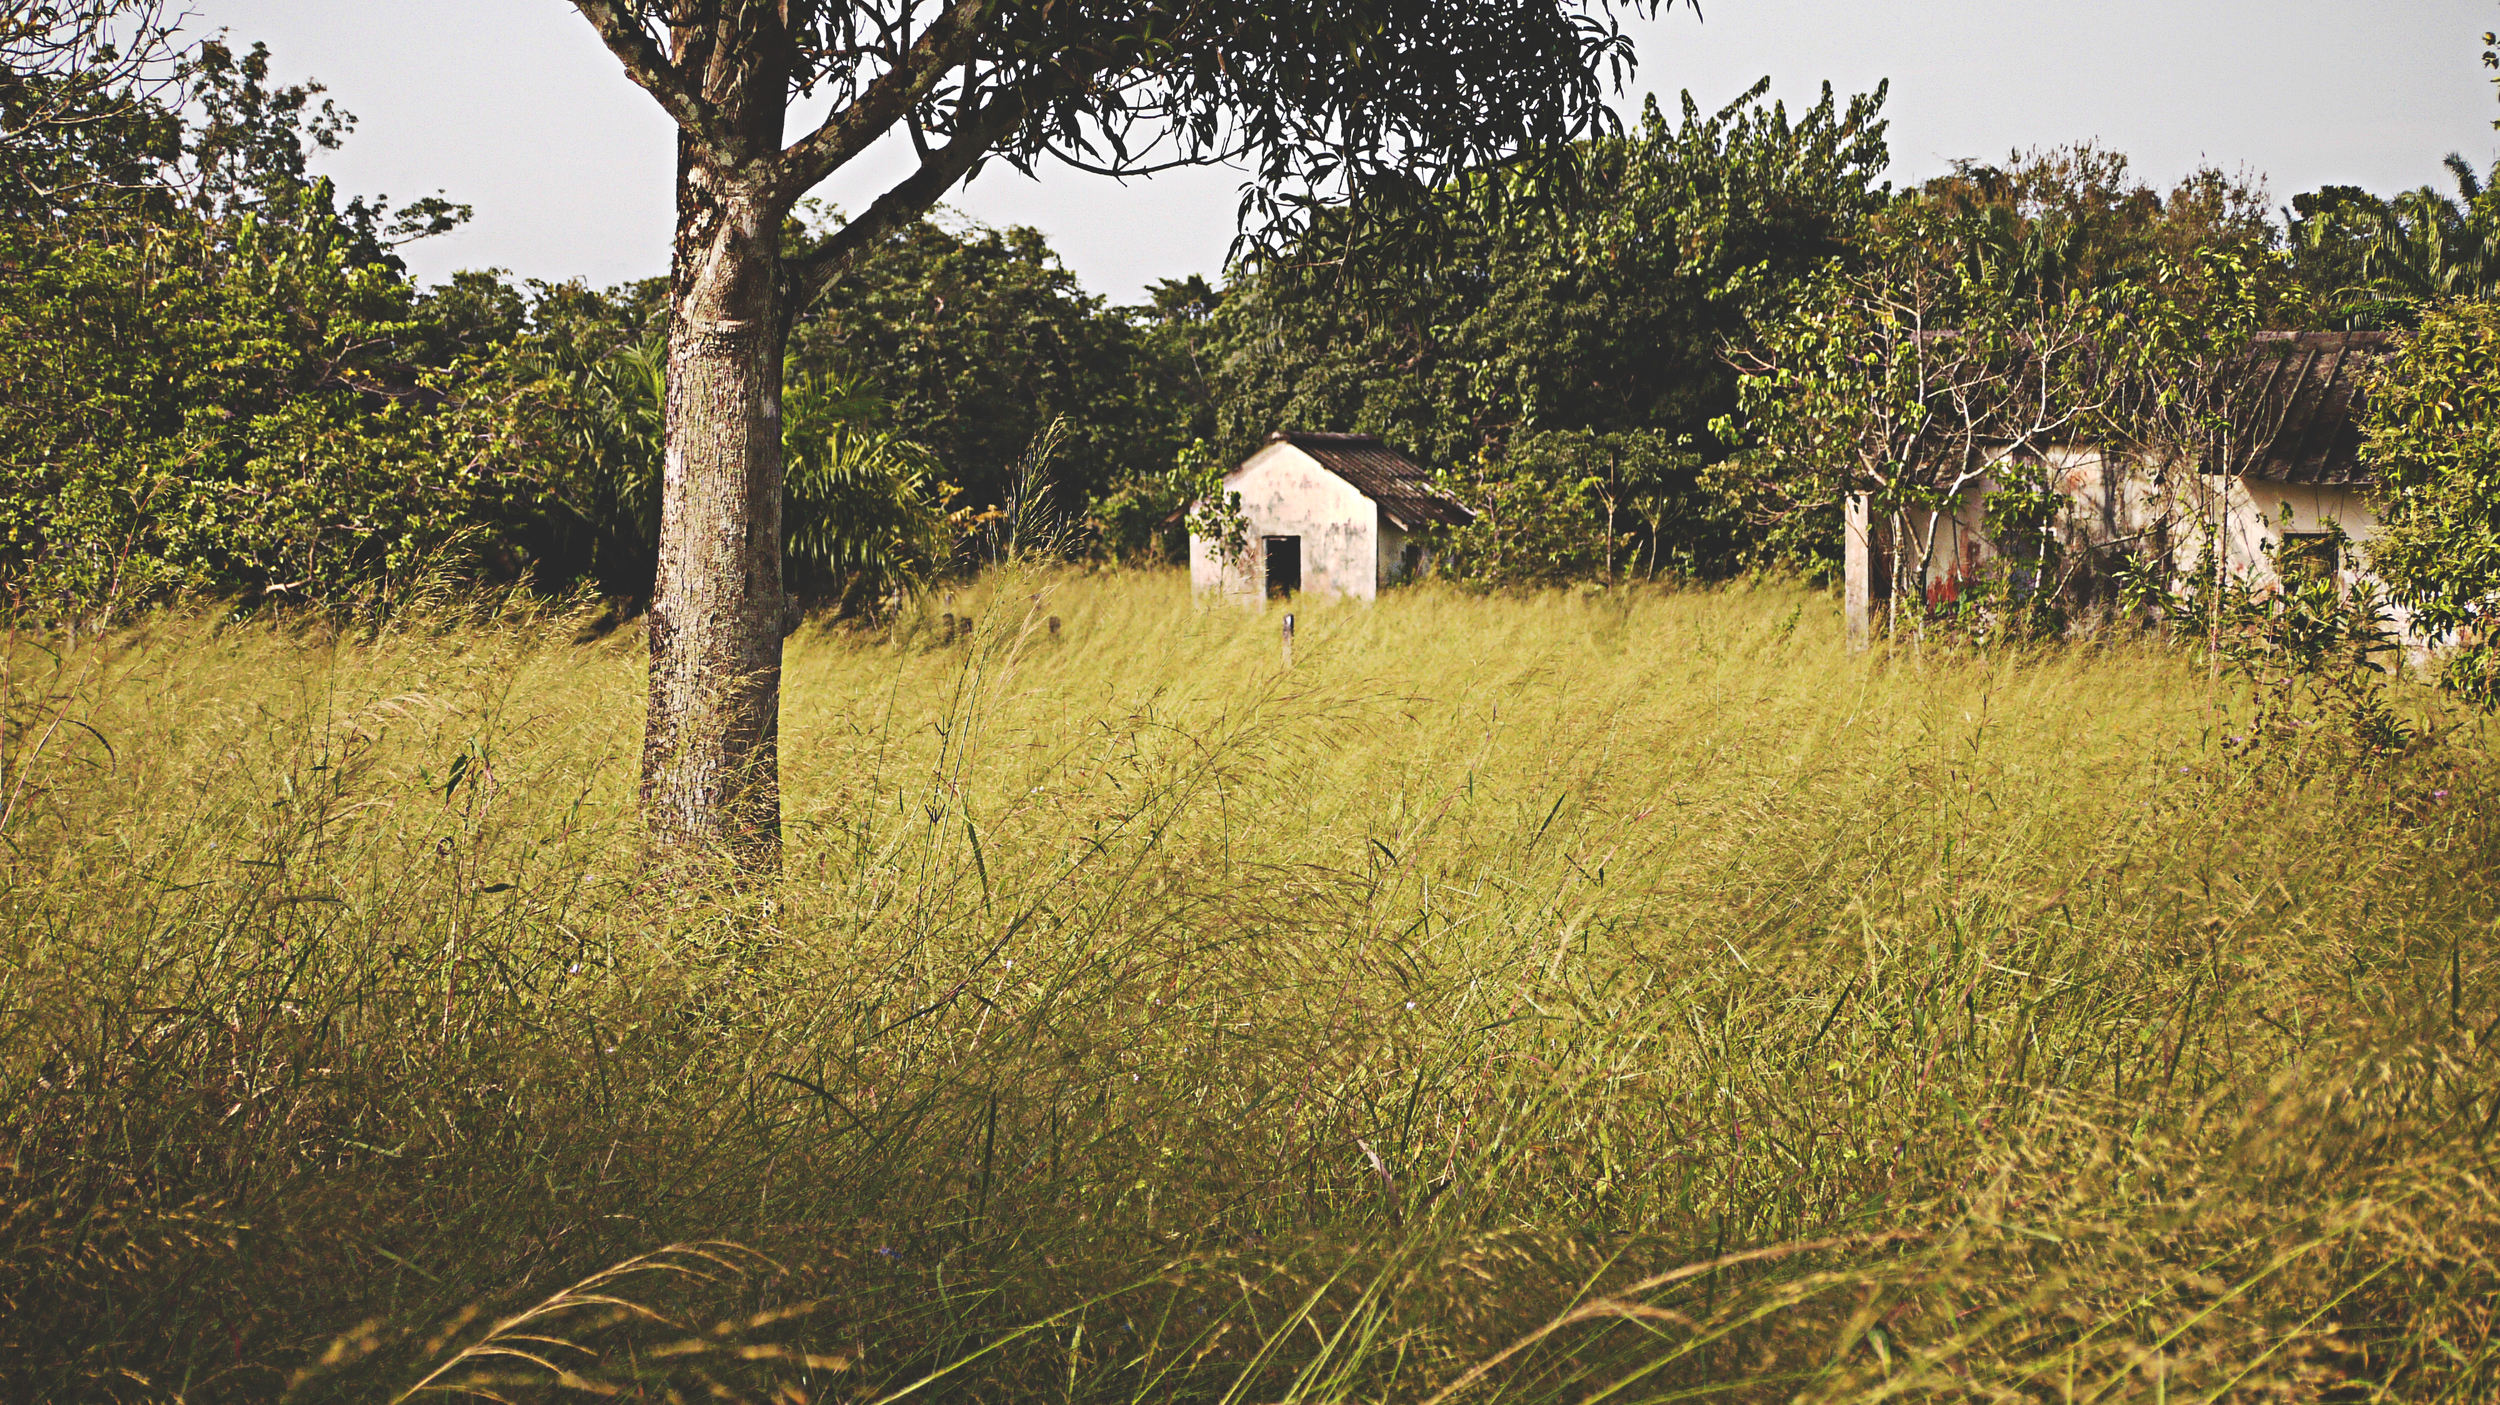 hut in grass.jpg